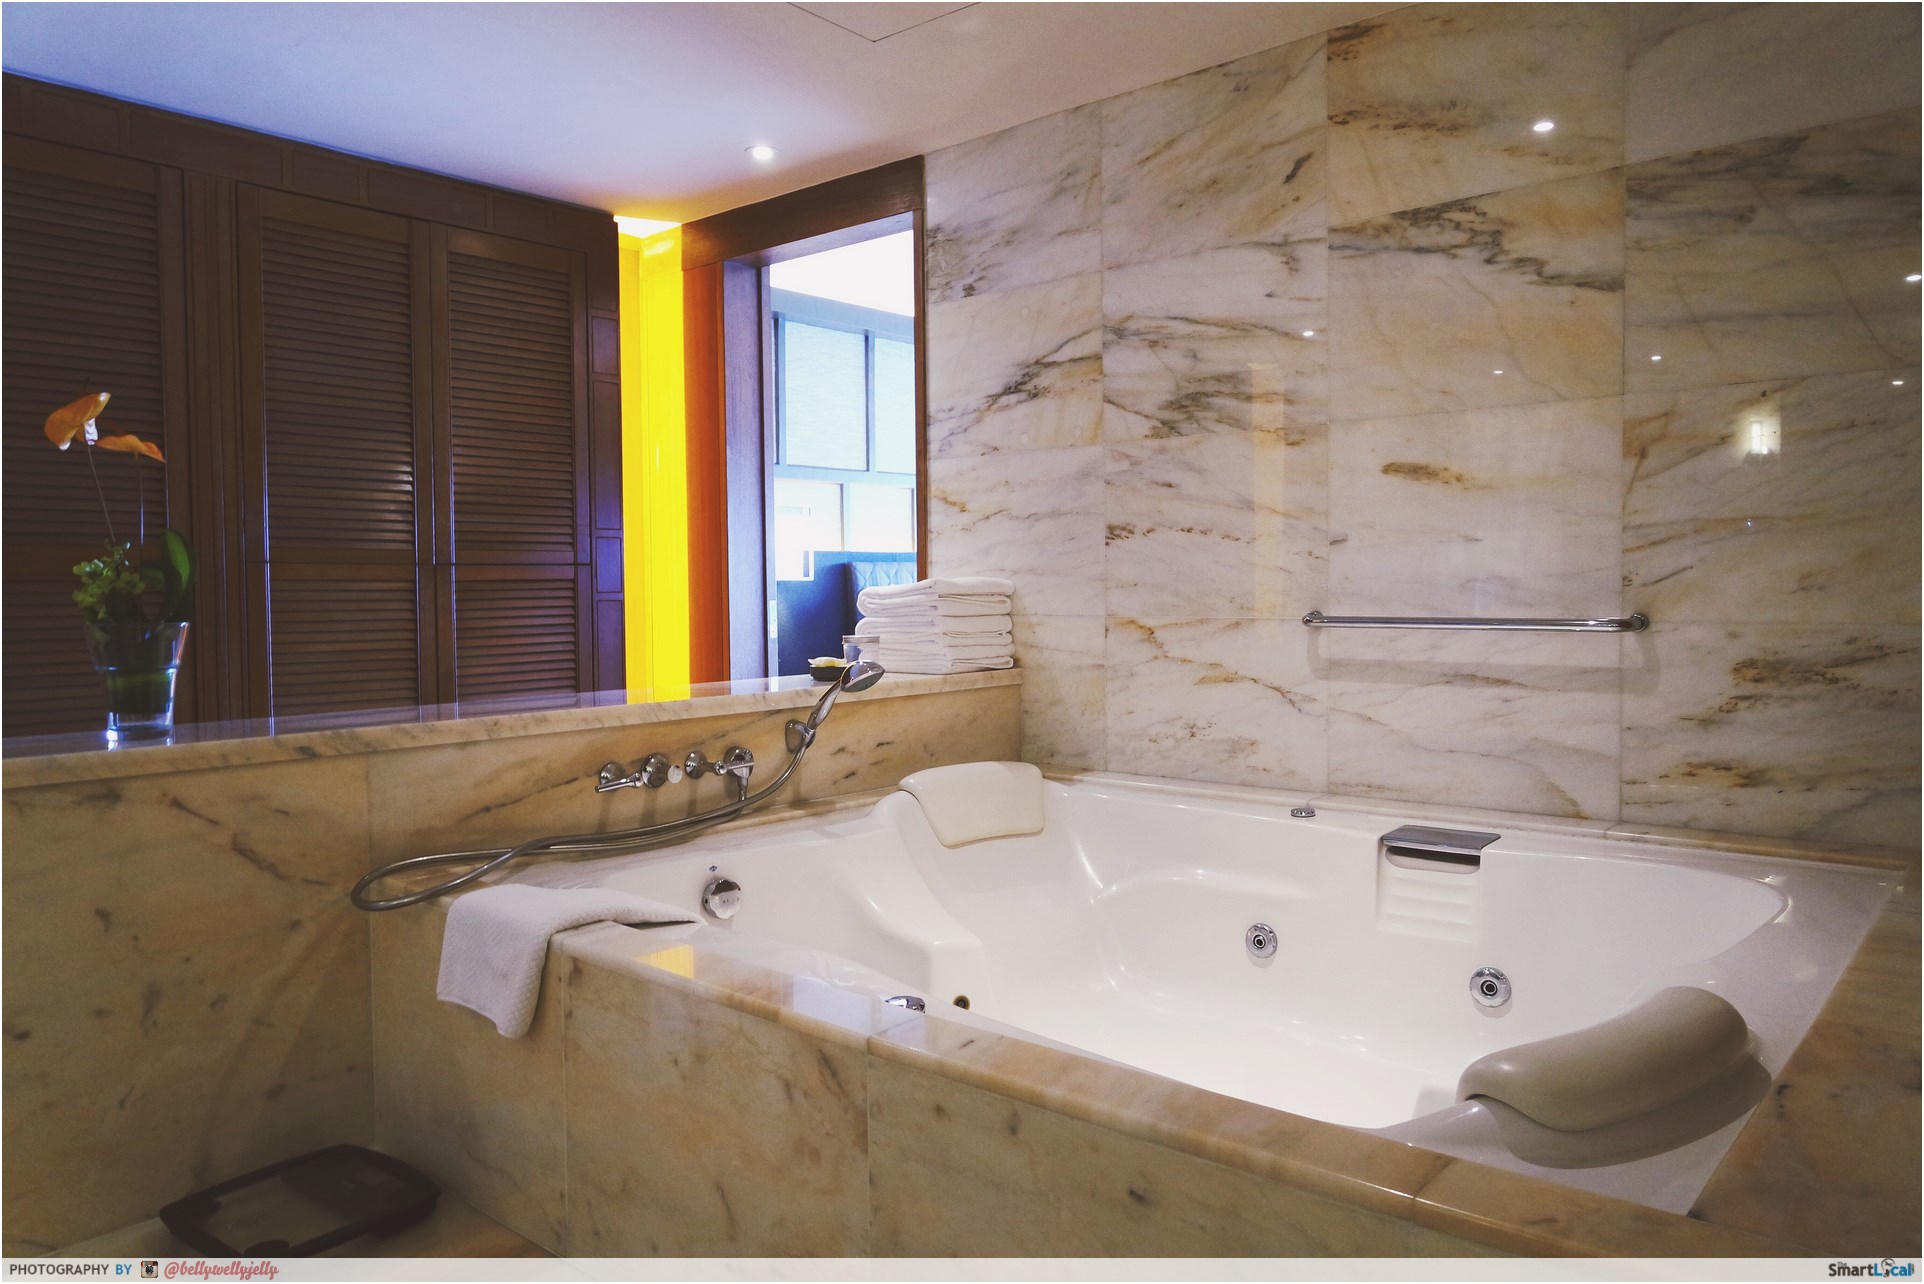 Hiuweny Bathtub Hotel Singapore, Hotels With Big Bathtubs